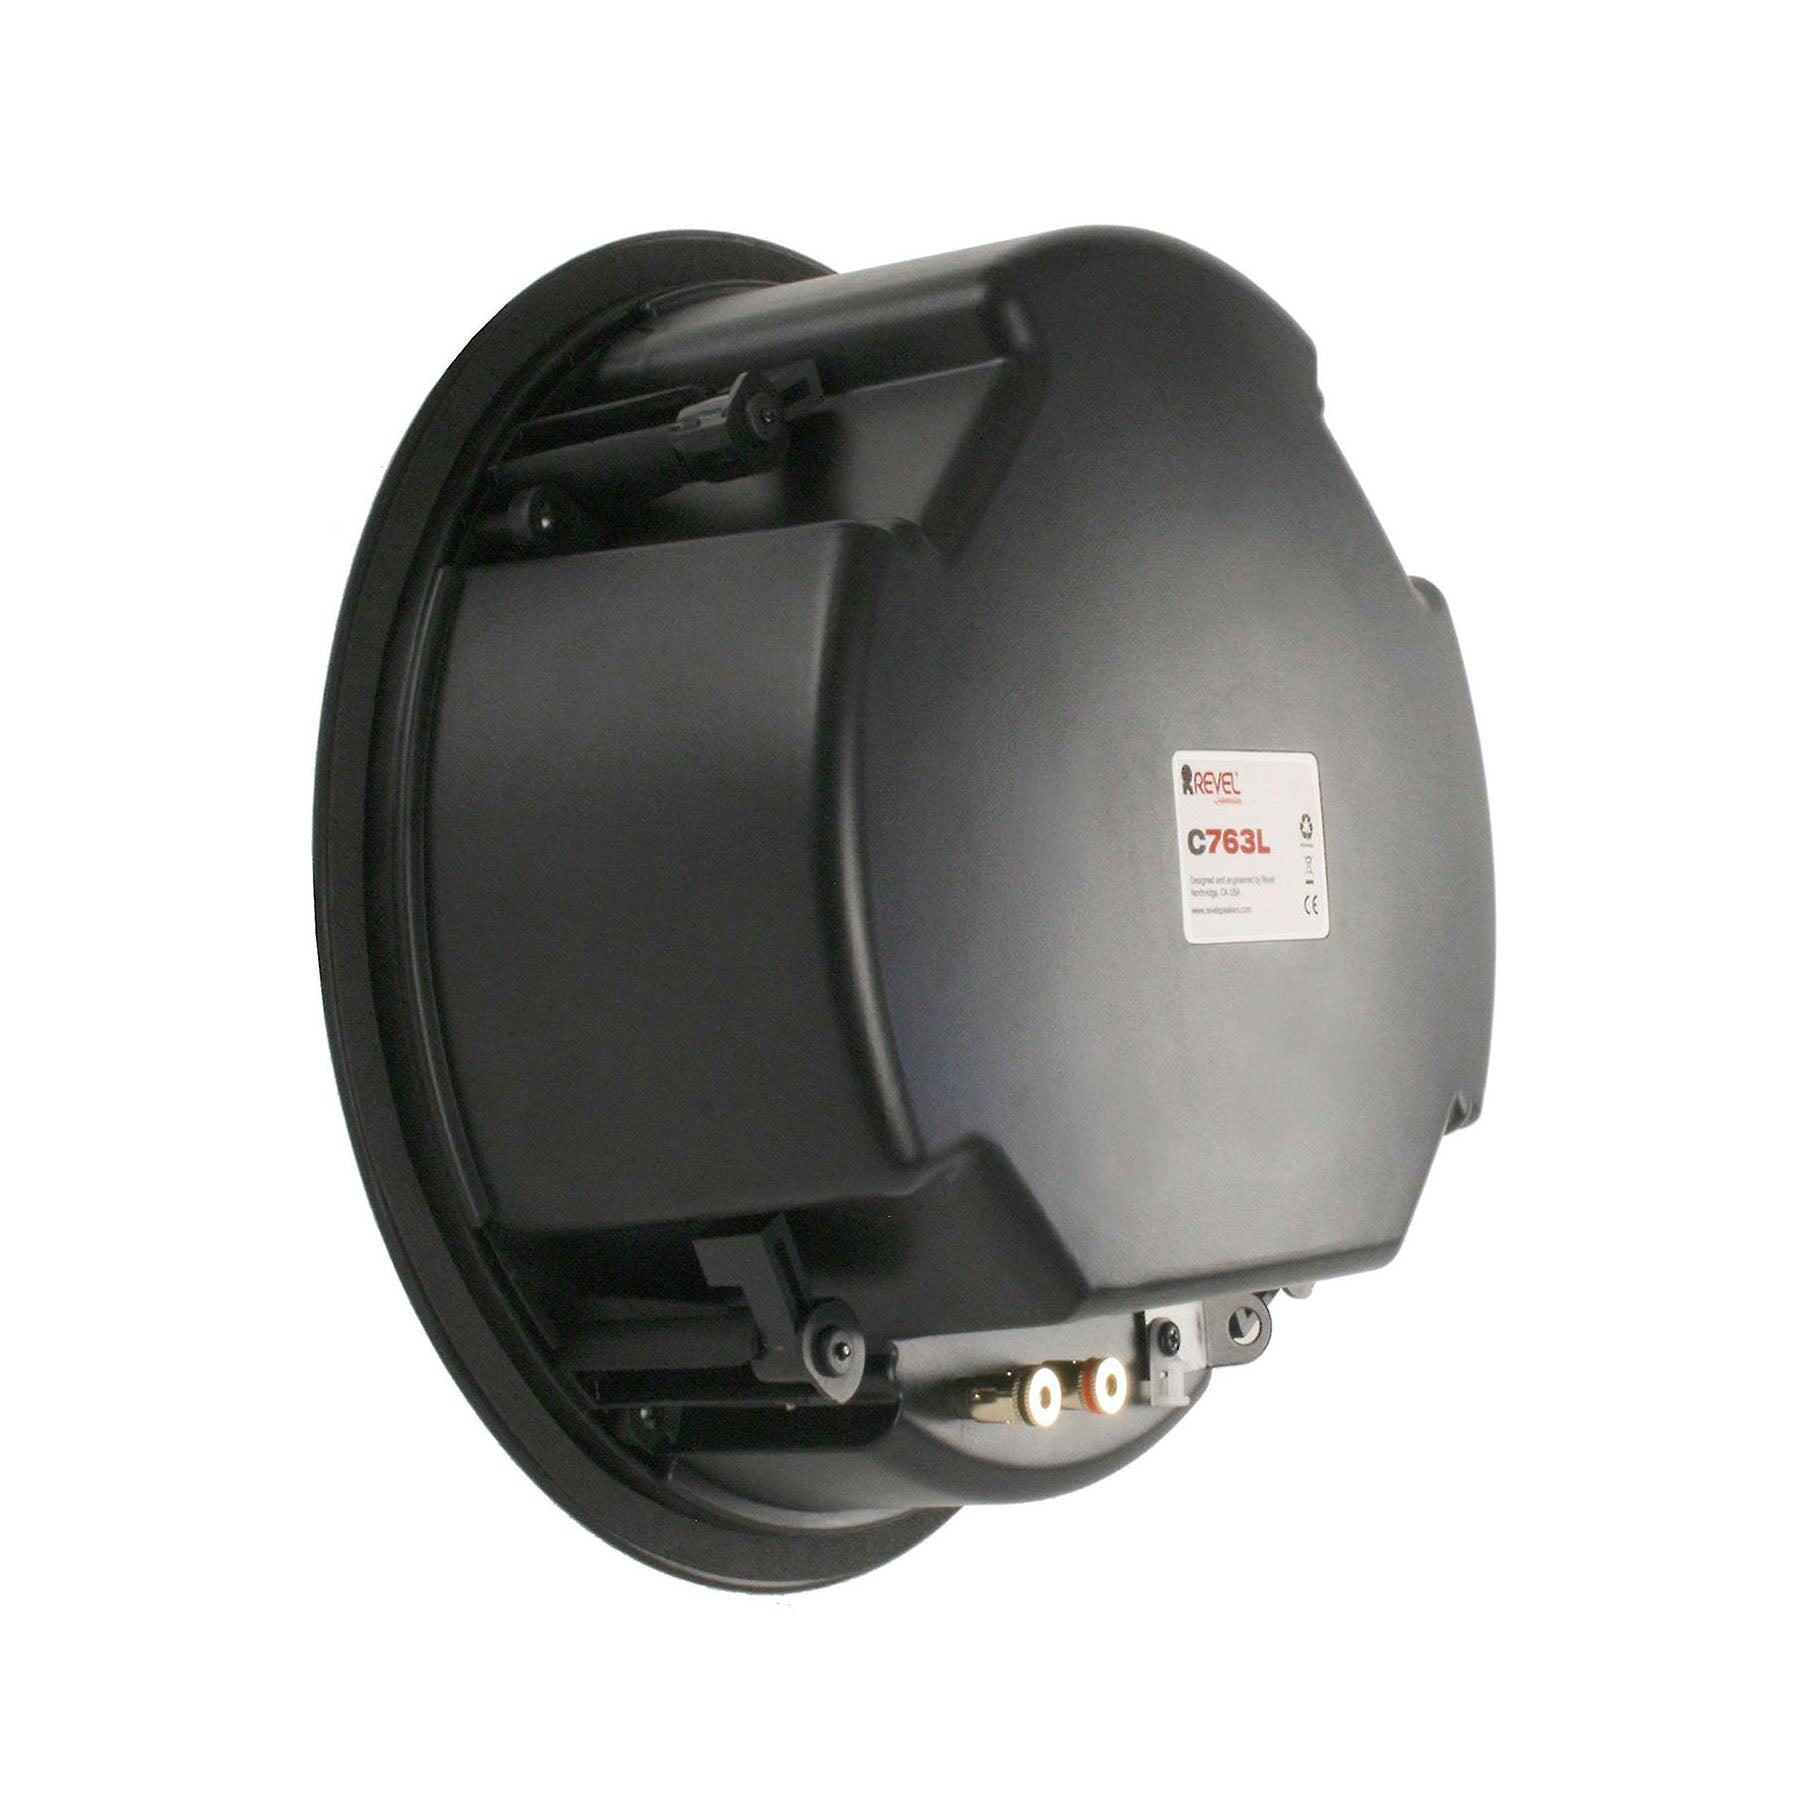 Revel C763L Specialty In-Ceiling Loudspeaker